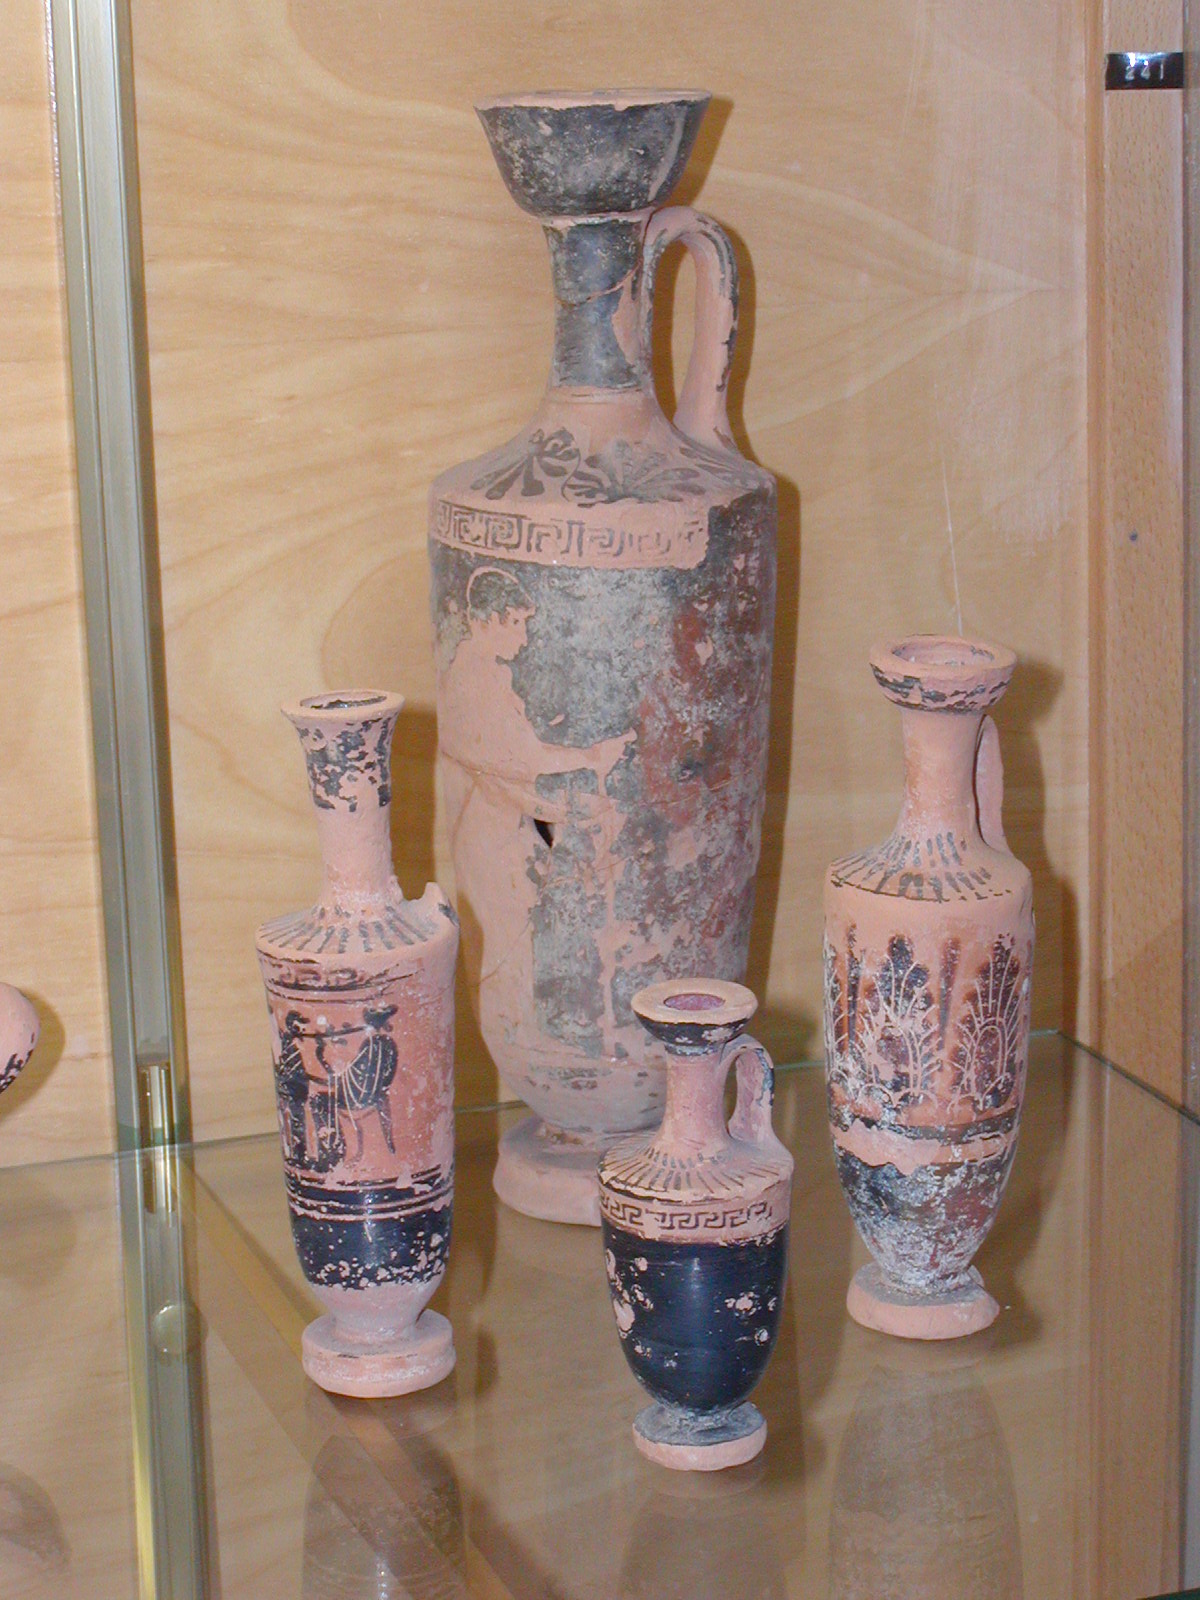 Archeological Museum "A. Salinas" - 2001-09-16-123712